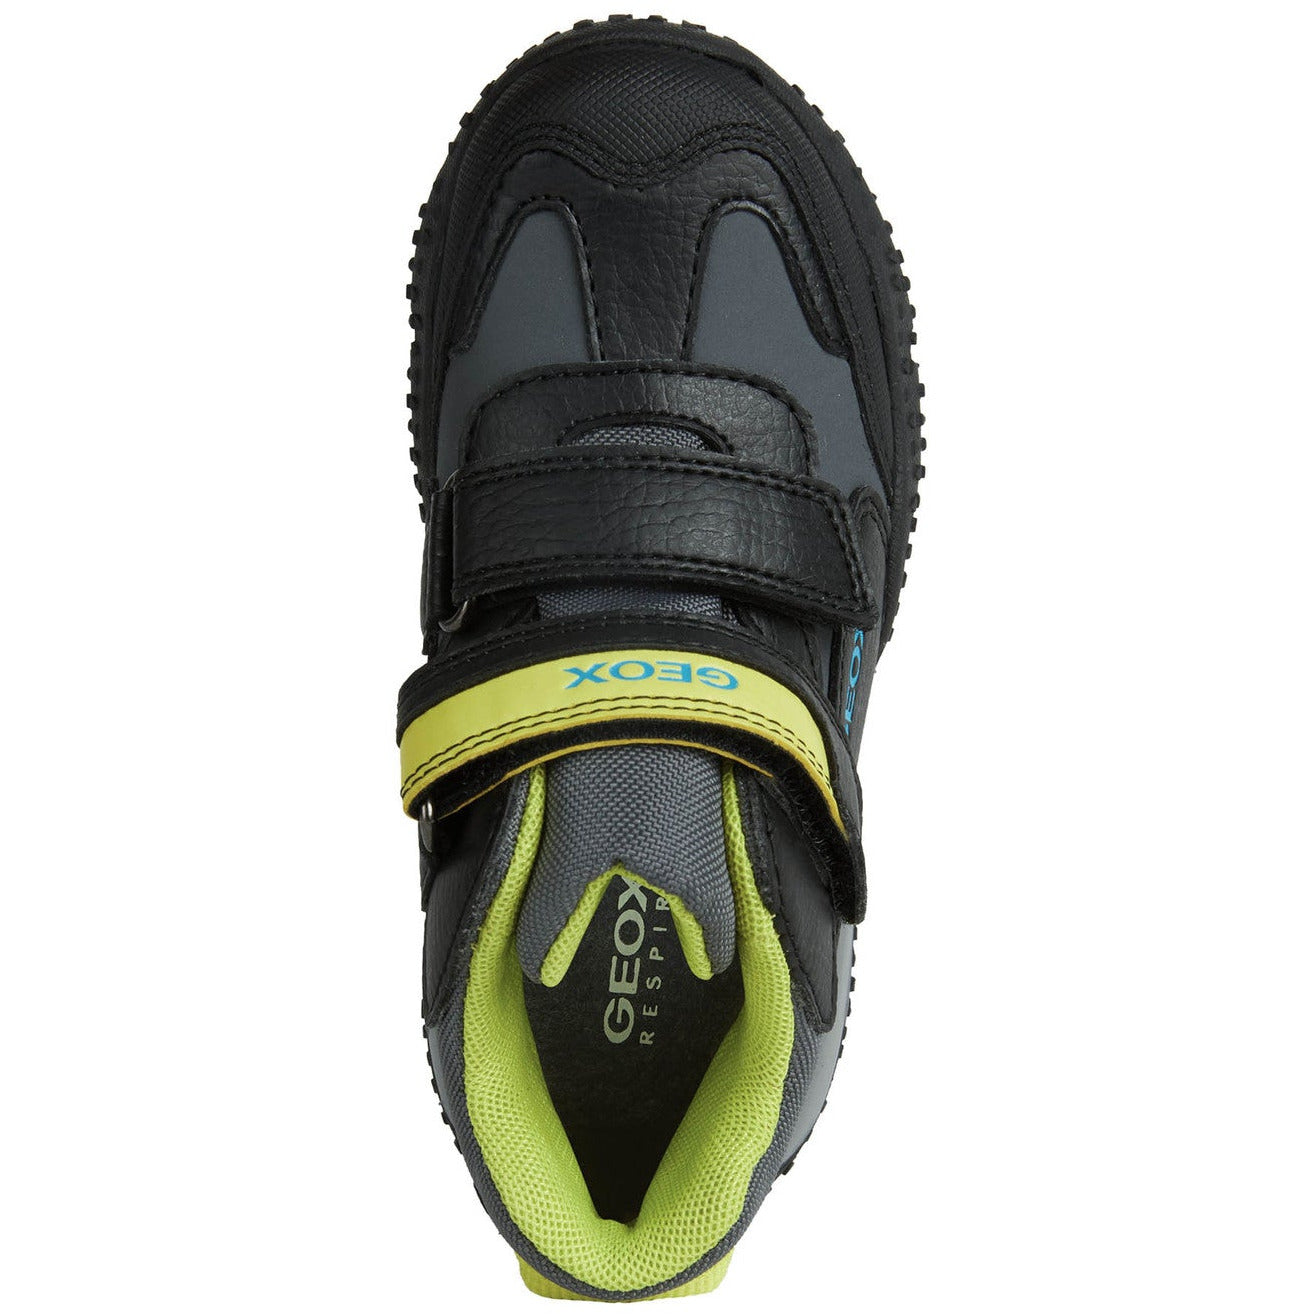 Geox Baltic (J2642A)- Boys Waterproof Velcro Boot  . Geox Shoes | Childrens Shoe Fitting | Wisemans | Bantry | West Cork | Ireland